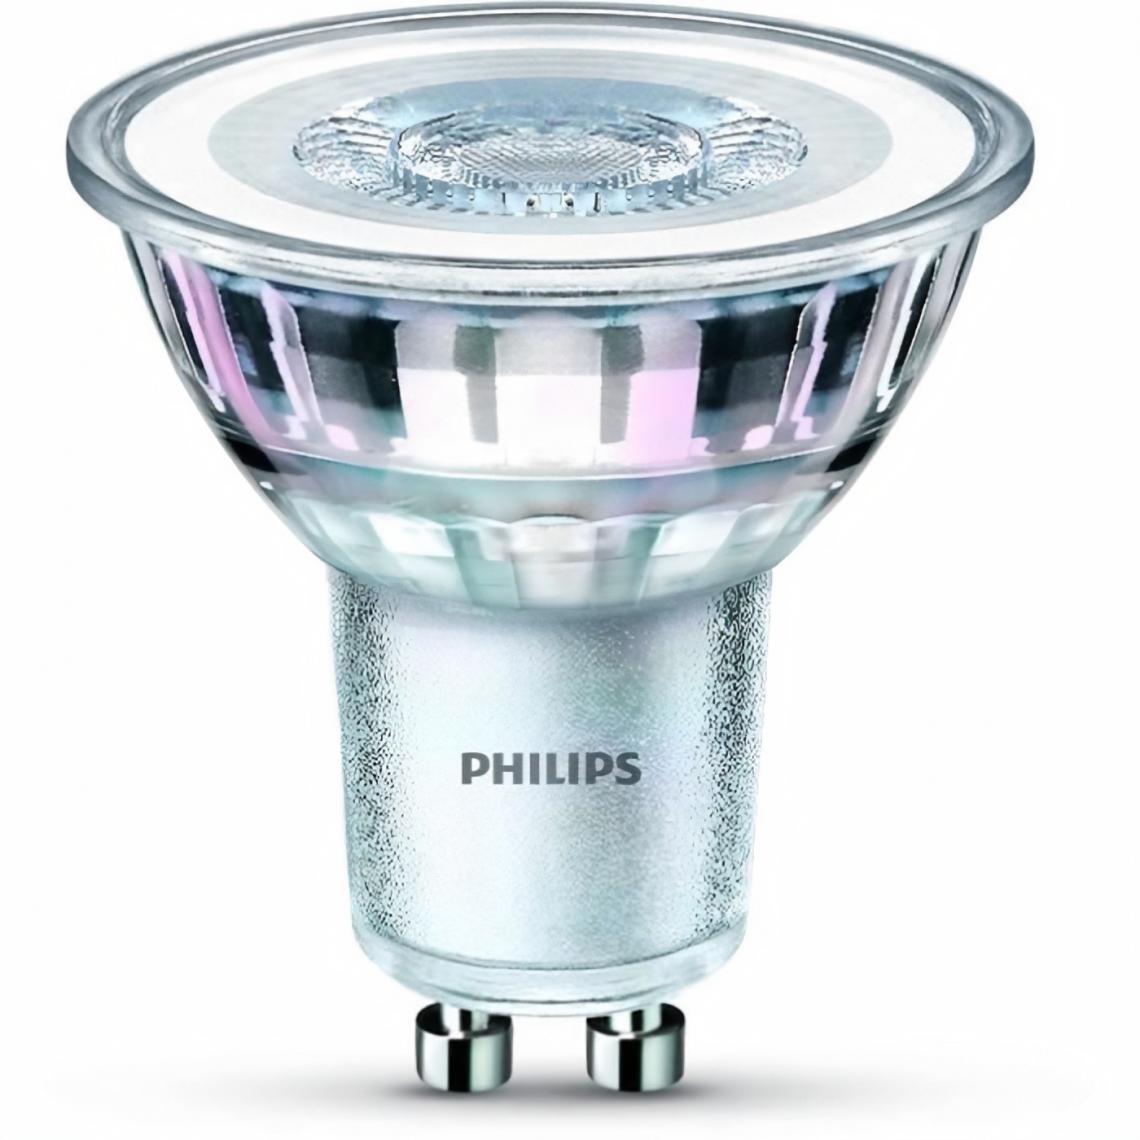 Philips - PHILIPS LED Classic 35W Spot Blanc Non Dimmable Lot de 2 - Ampoules LED